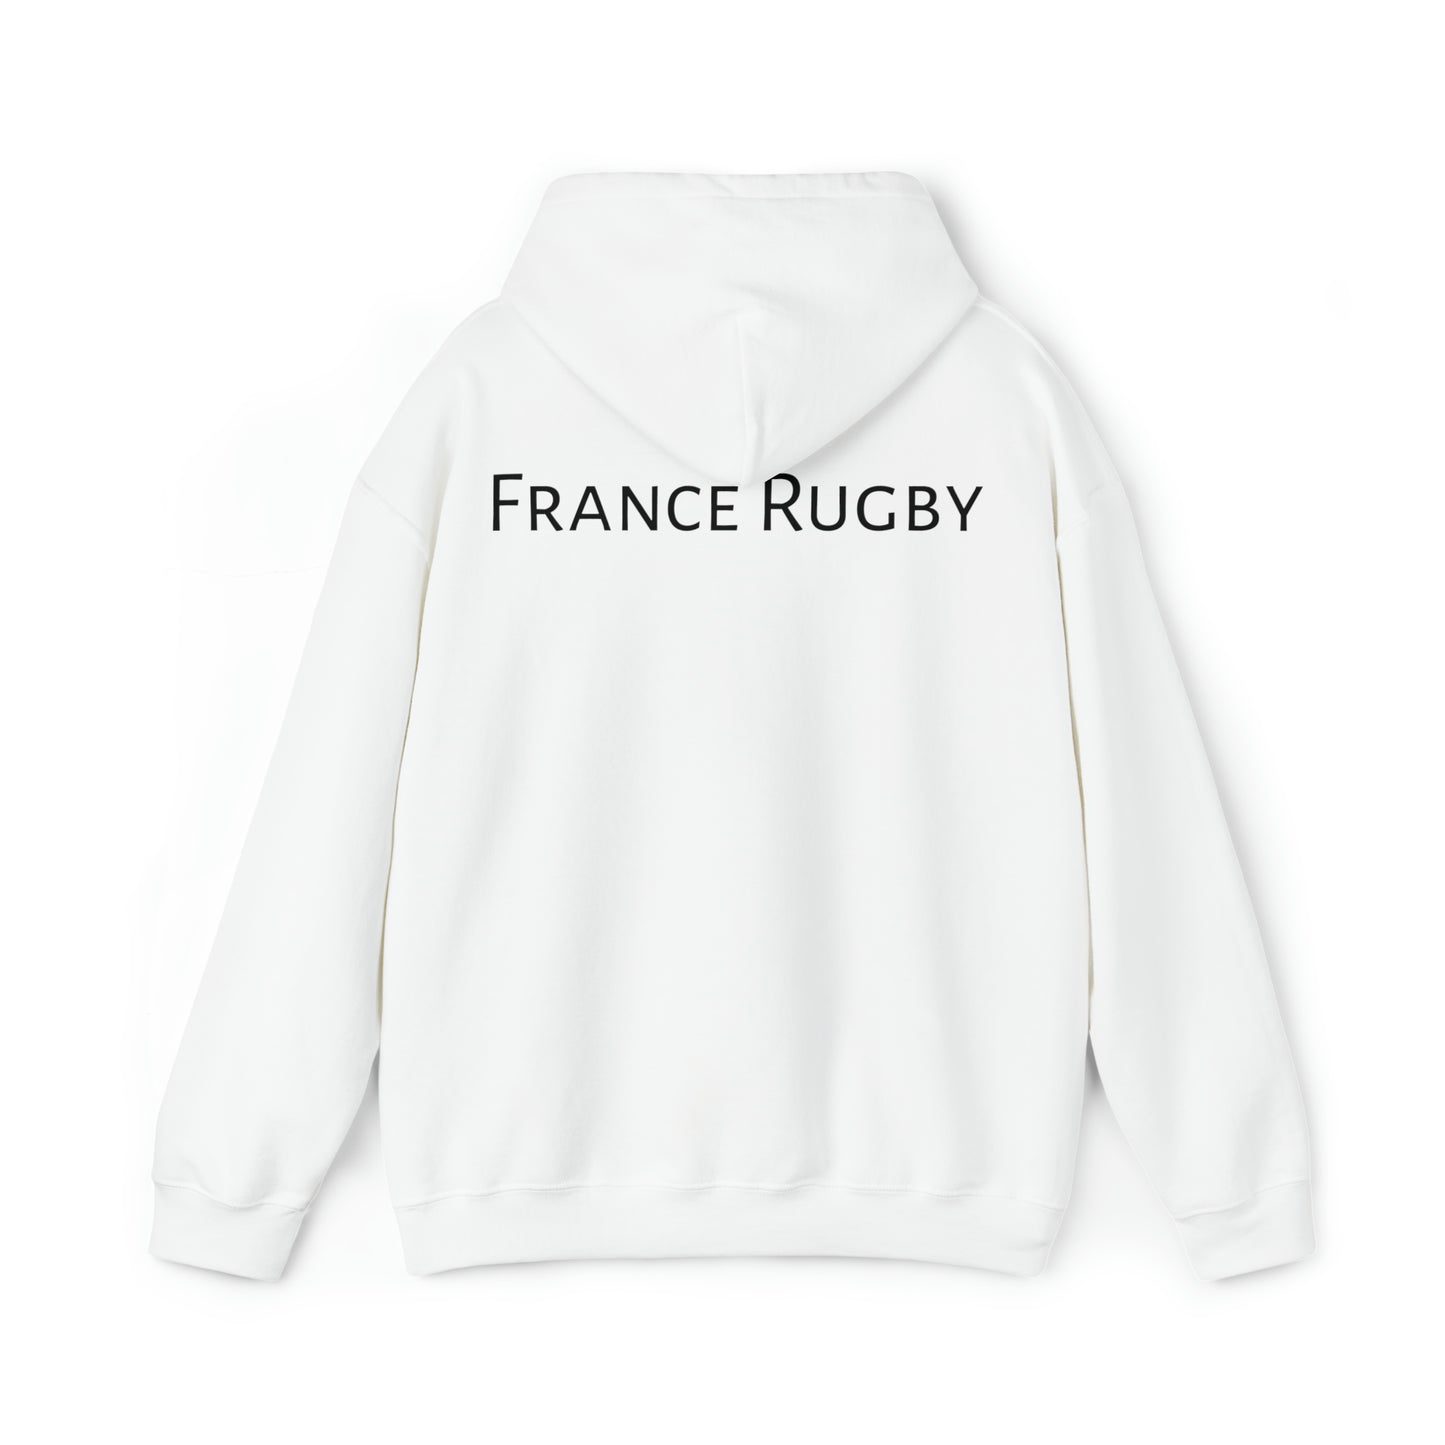 Ready France - light hoodies